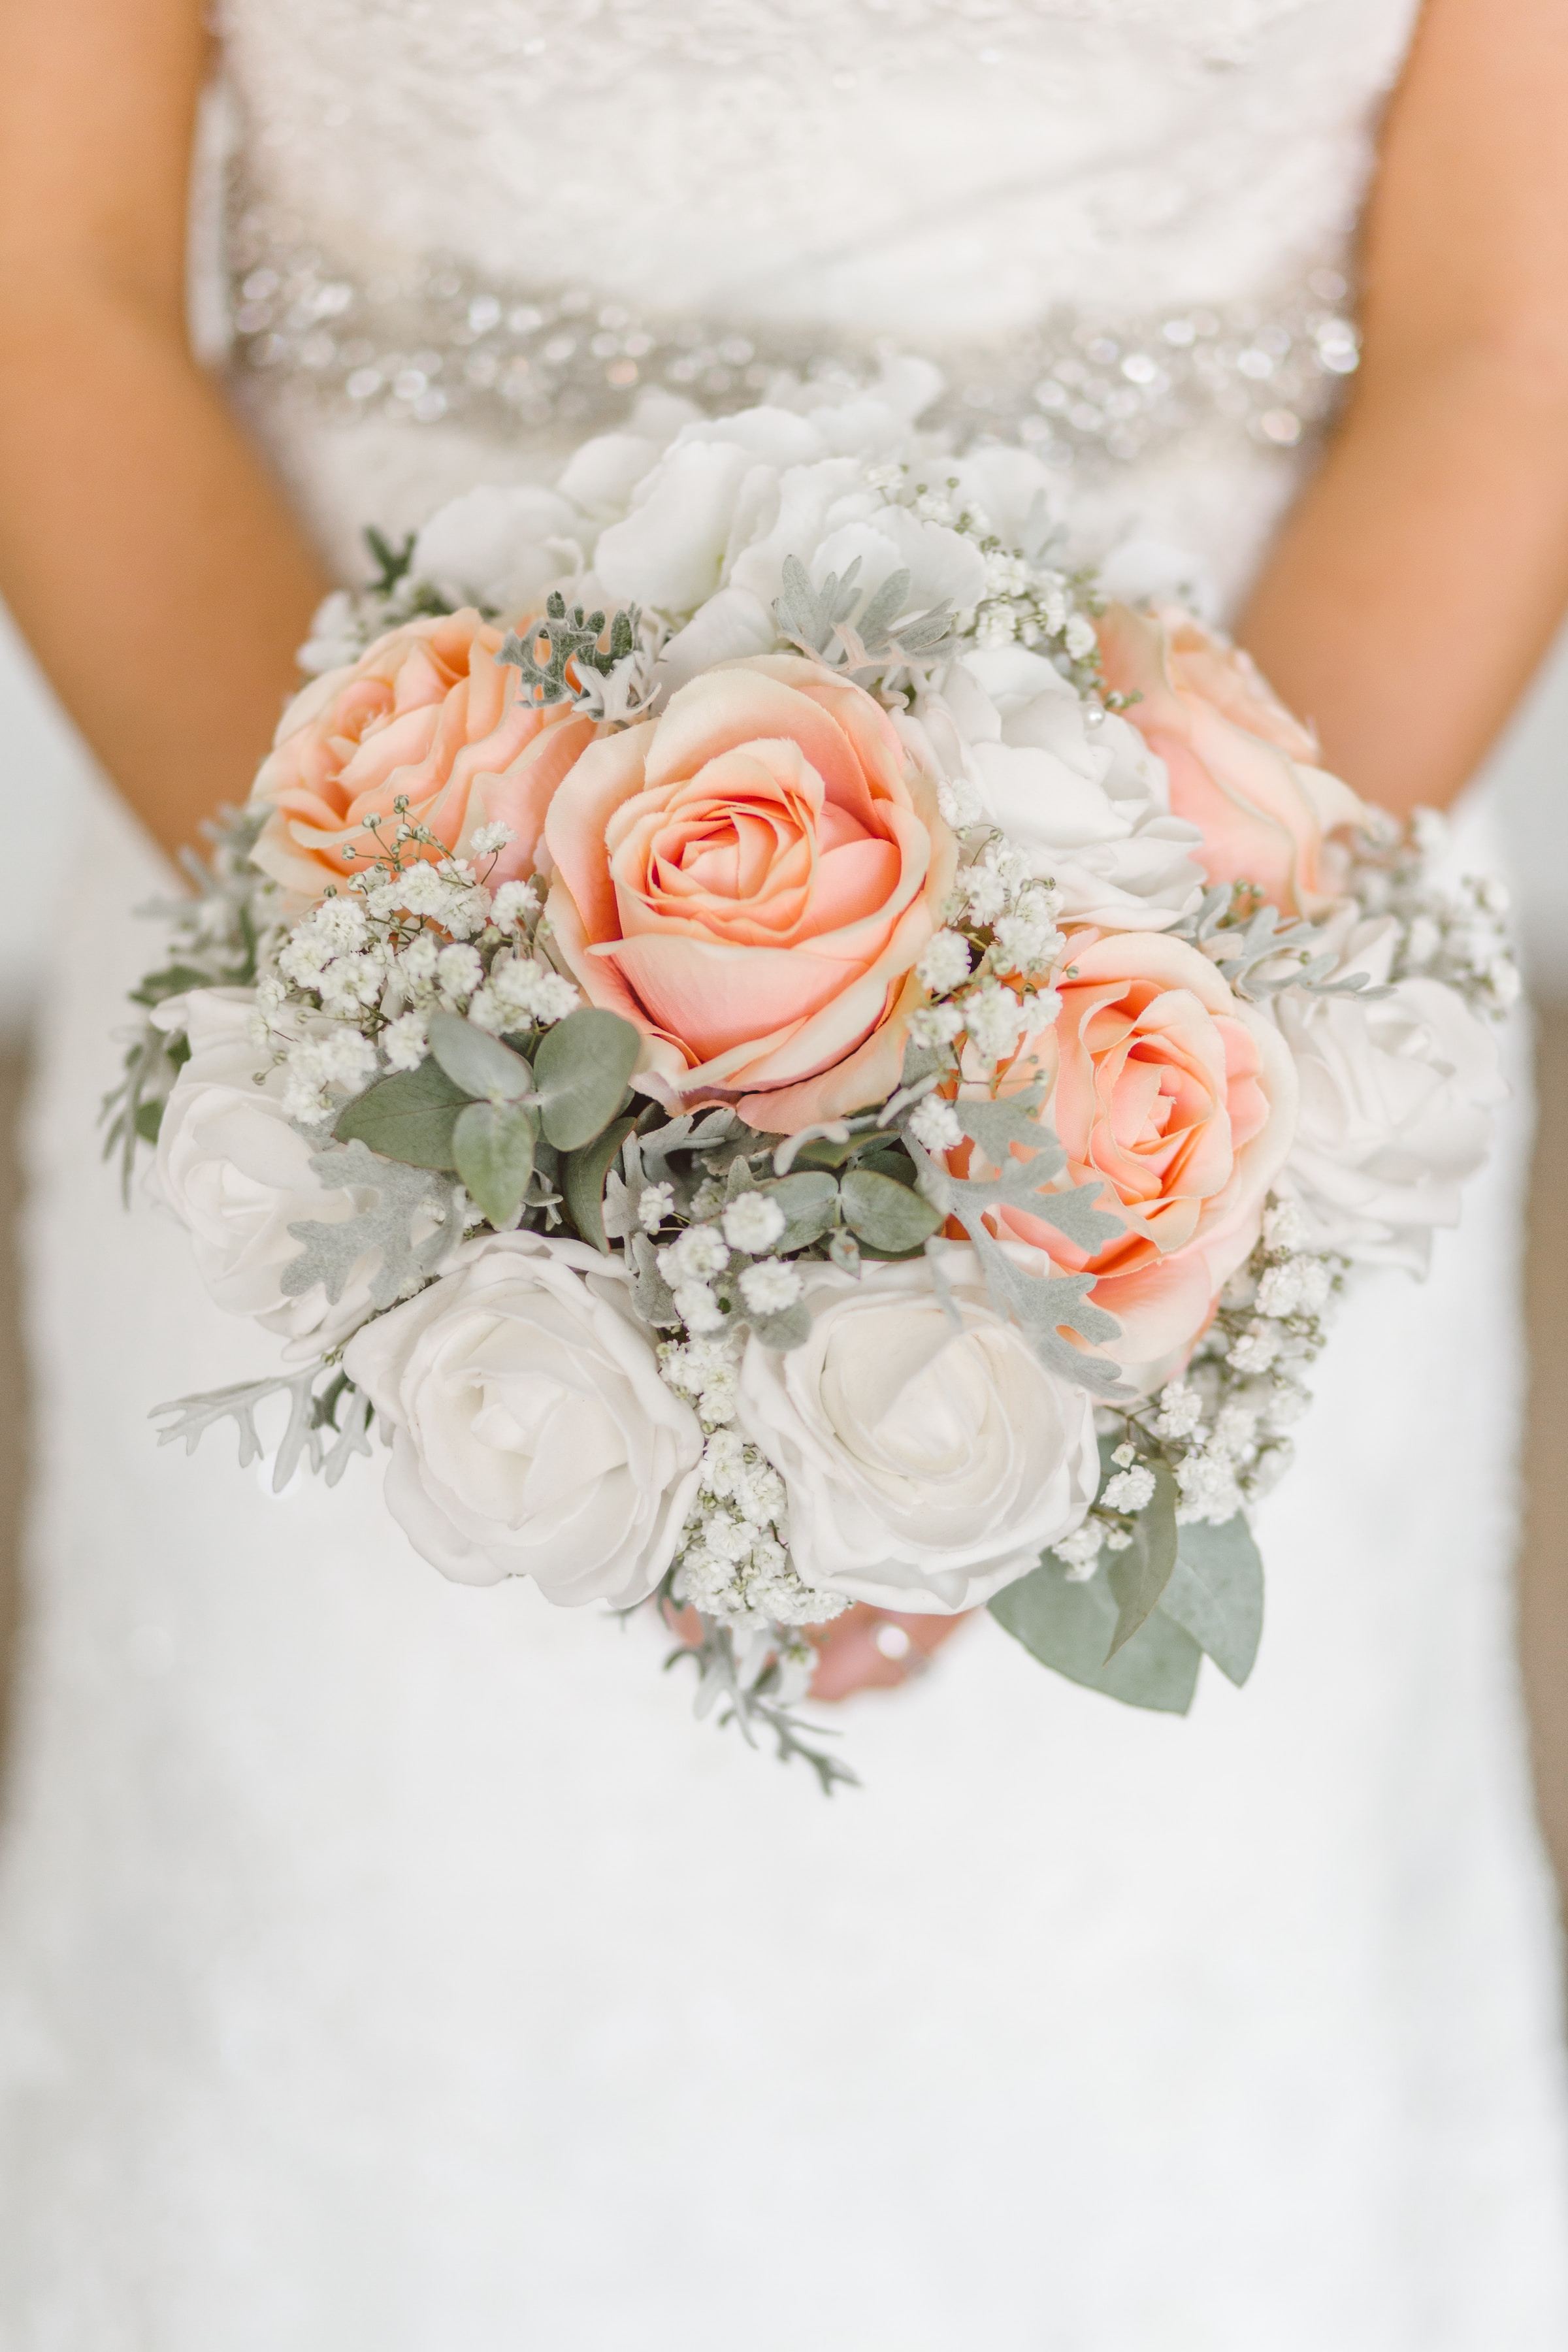 A bride holding flowers | Source: Unsplash